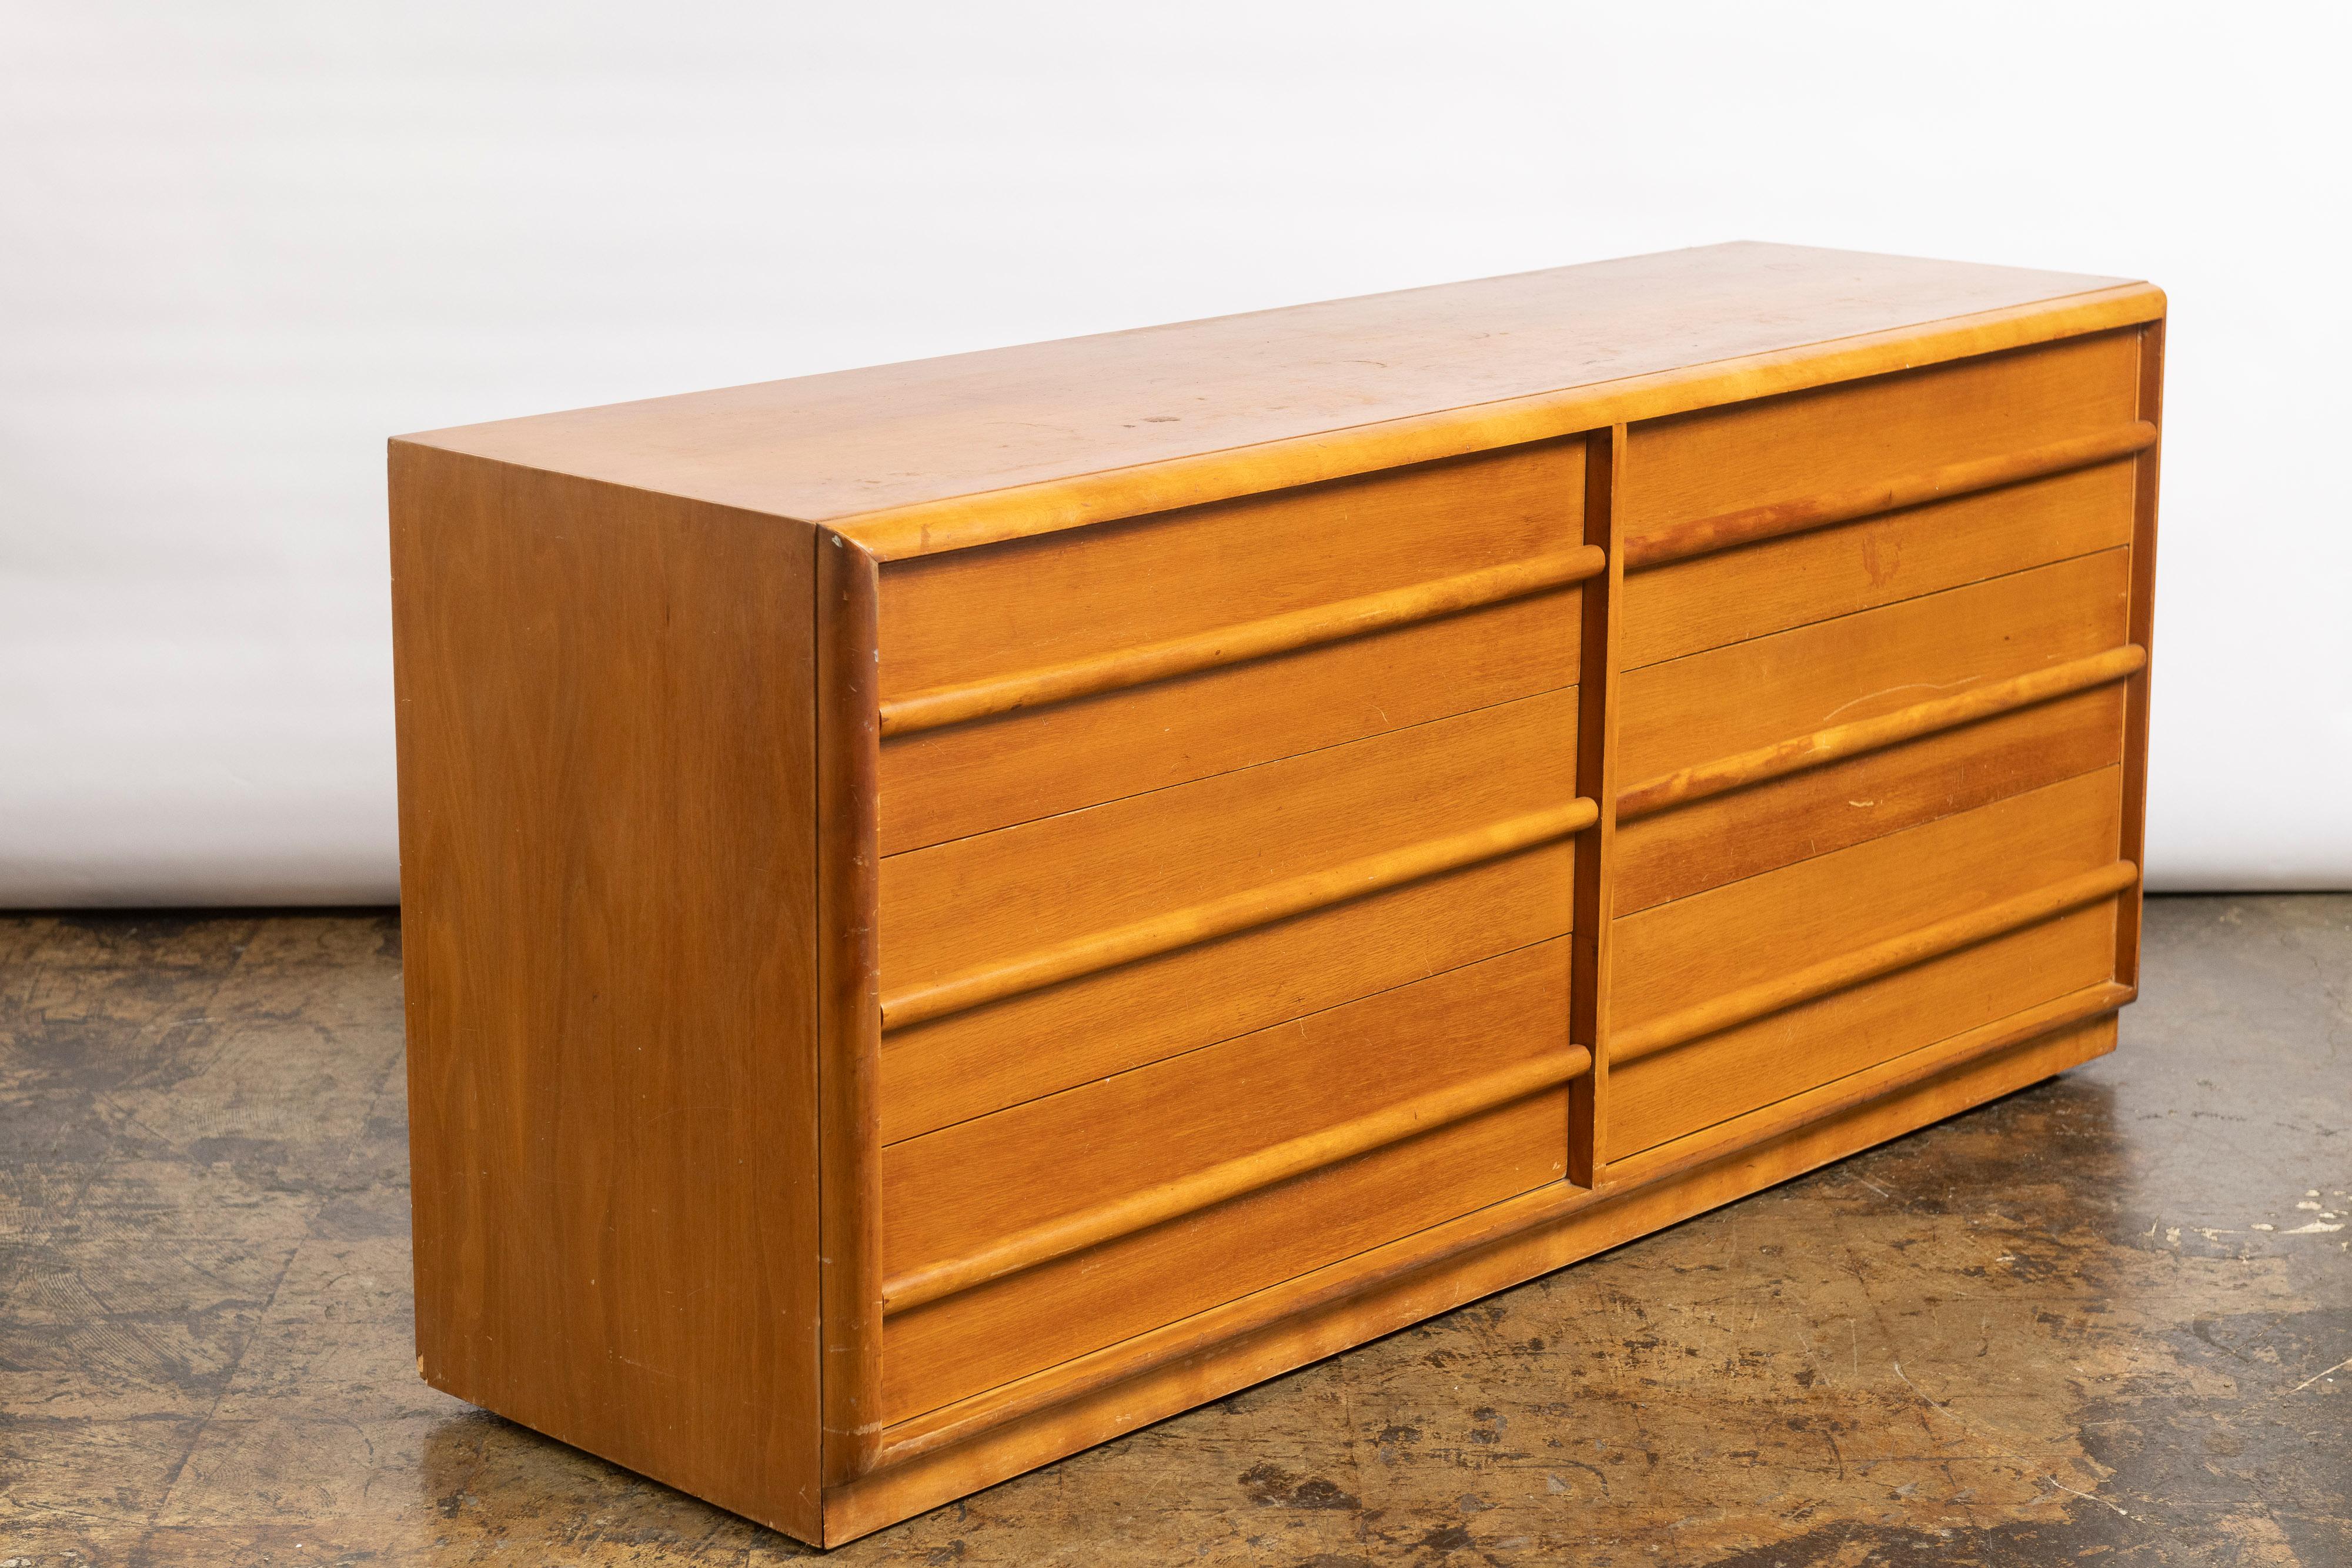 Six Drawer Teak Chest/Dresser by T.H. Robsjohn-Gibbings for Widdicomb In Good Condition For Sale In San Francisco, CA